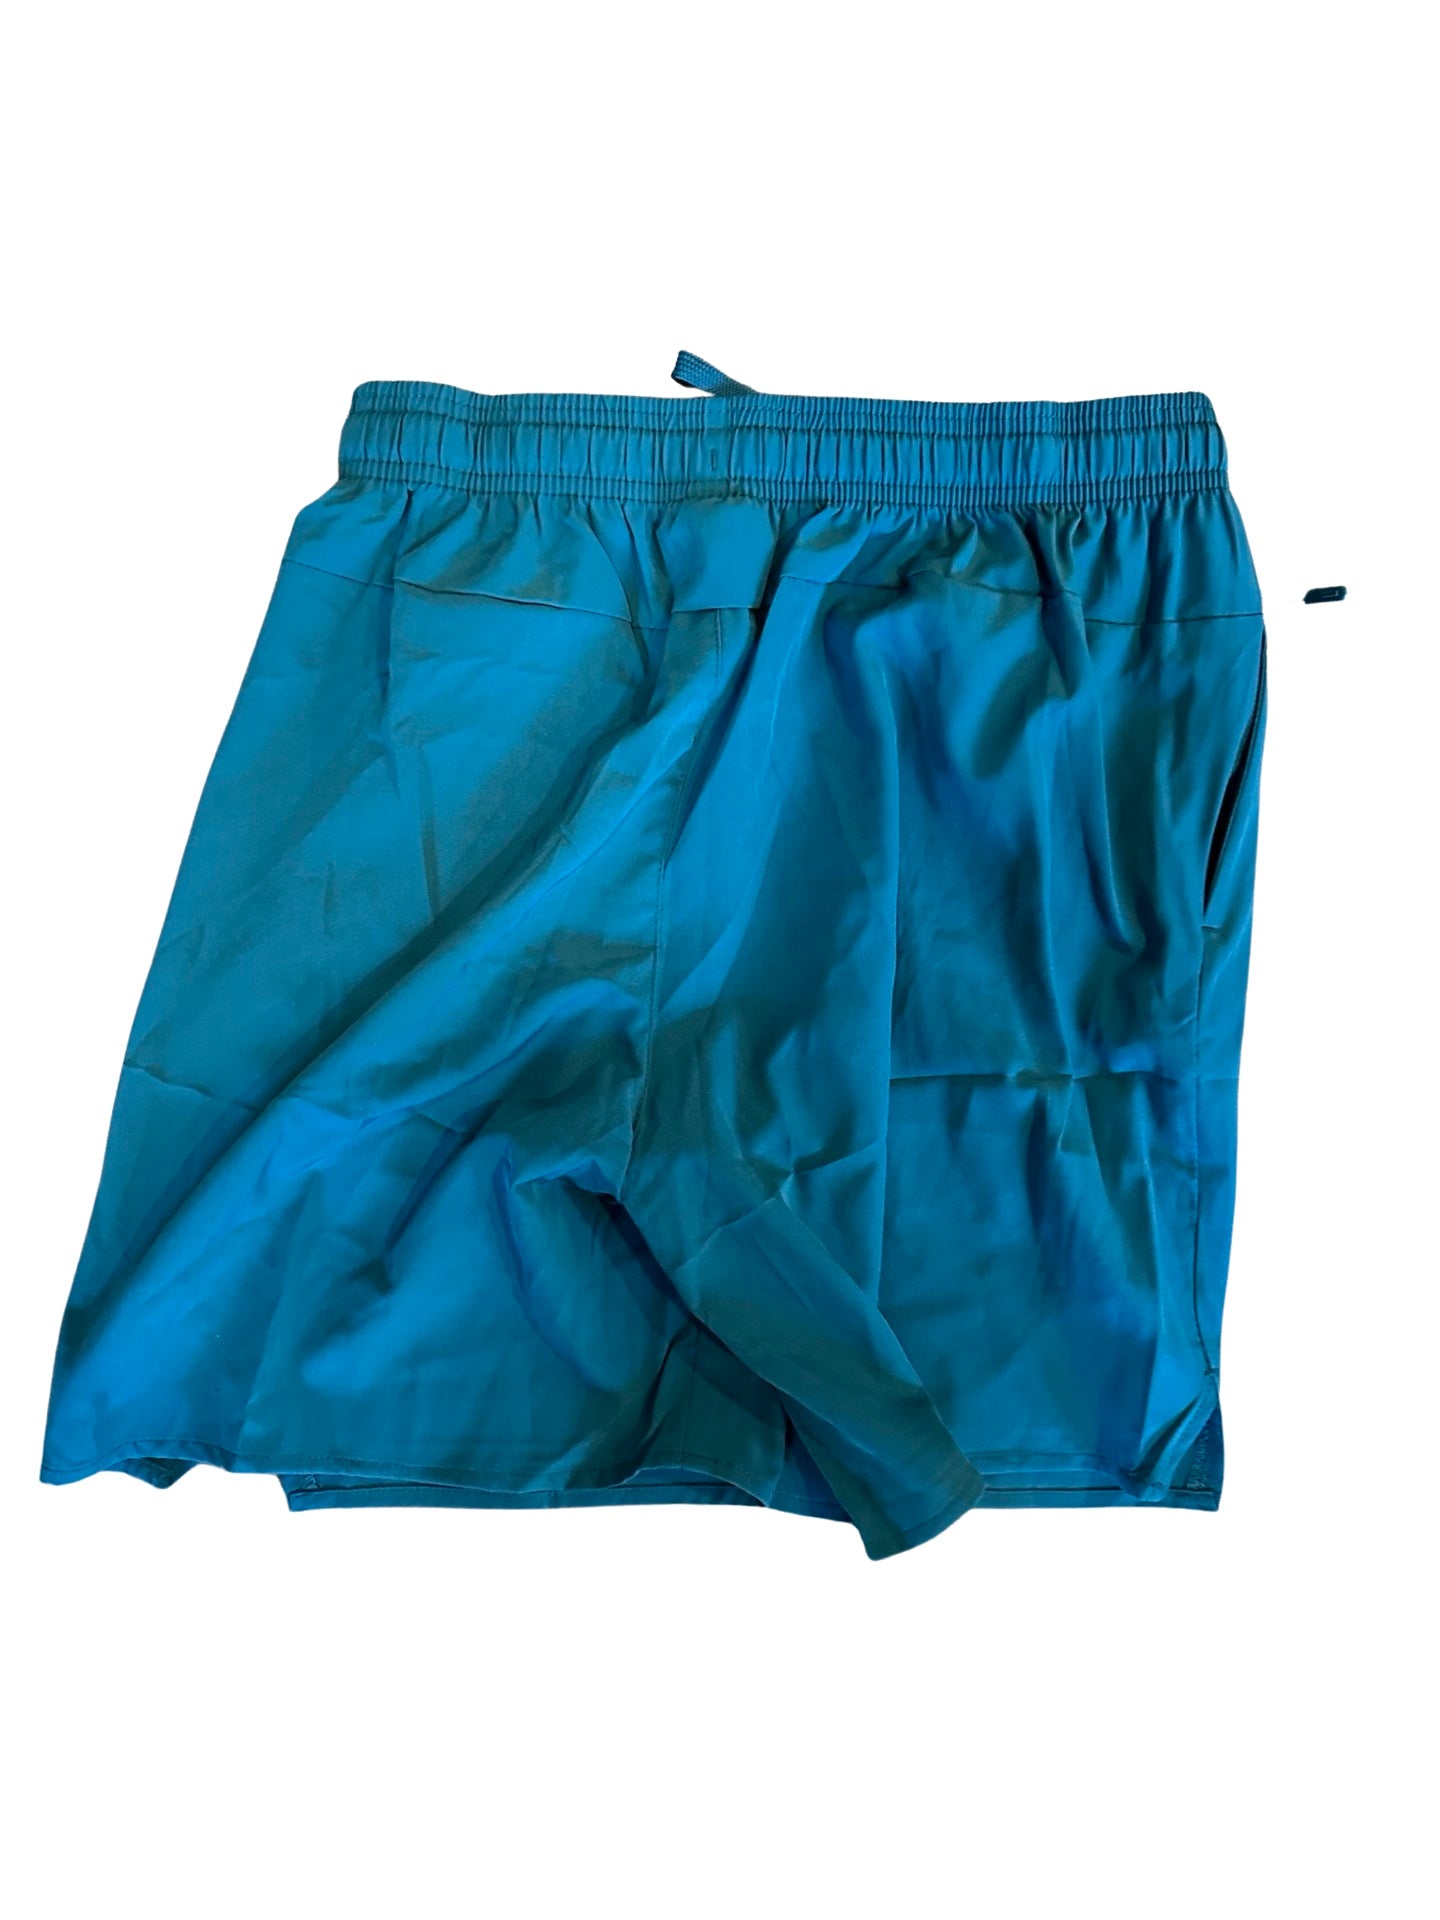 Men's Nimbus Shorts with Side Zip Pockets 7"